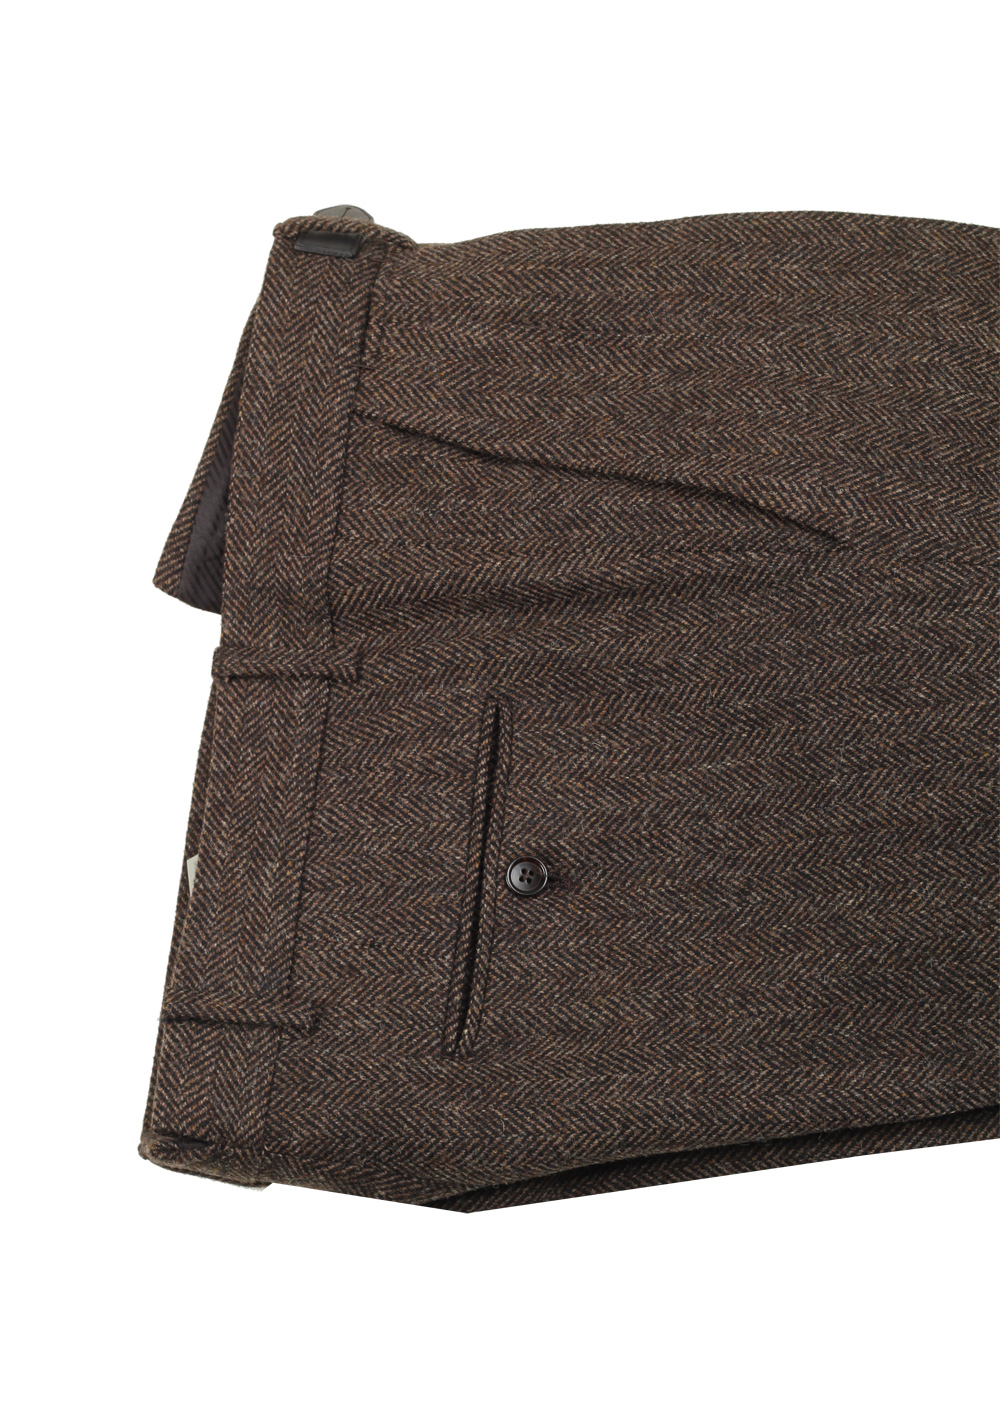 TOM FORD Atticus Brown Herringbone Suit Size 46 / 36R U.S. | Costume Limité